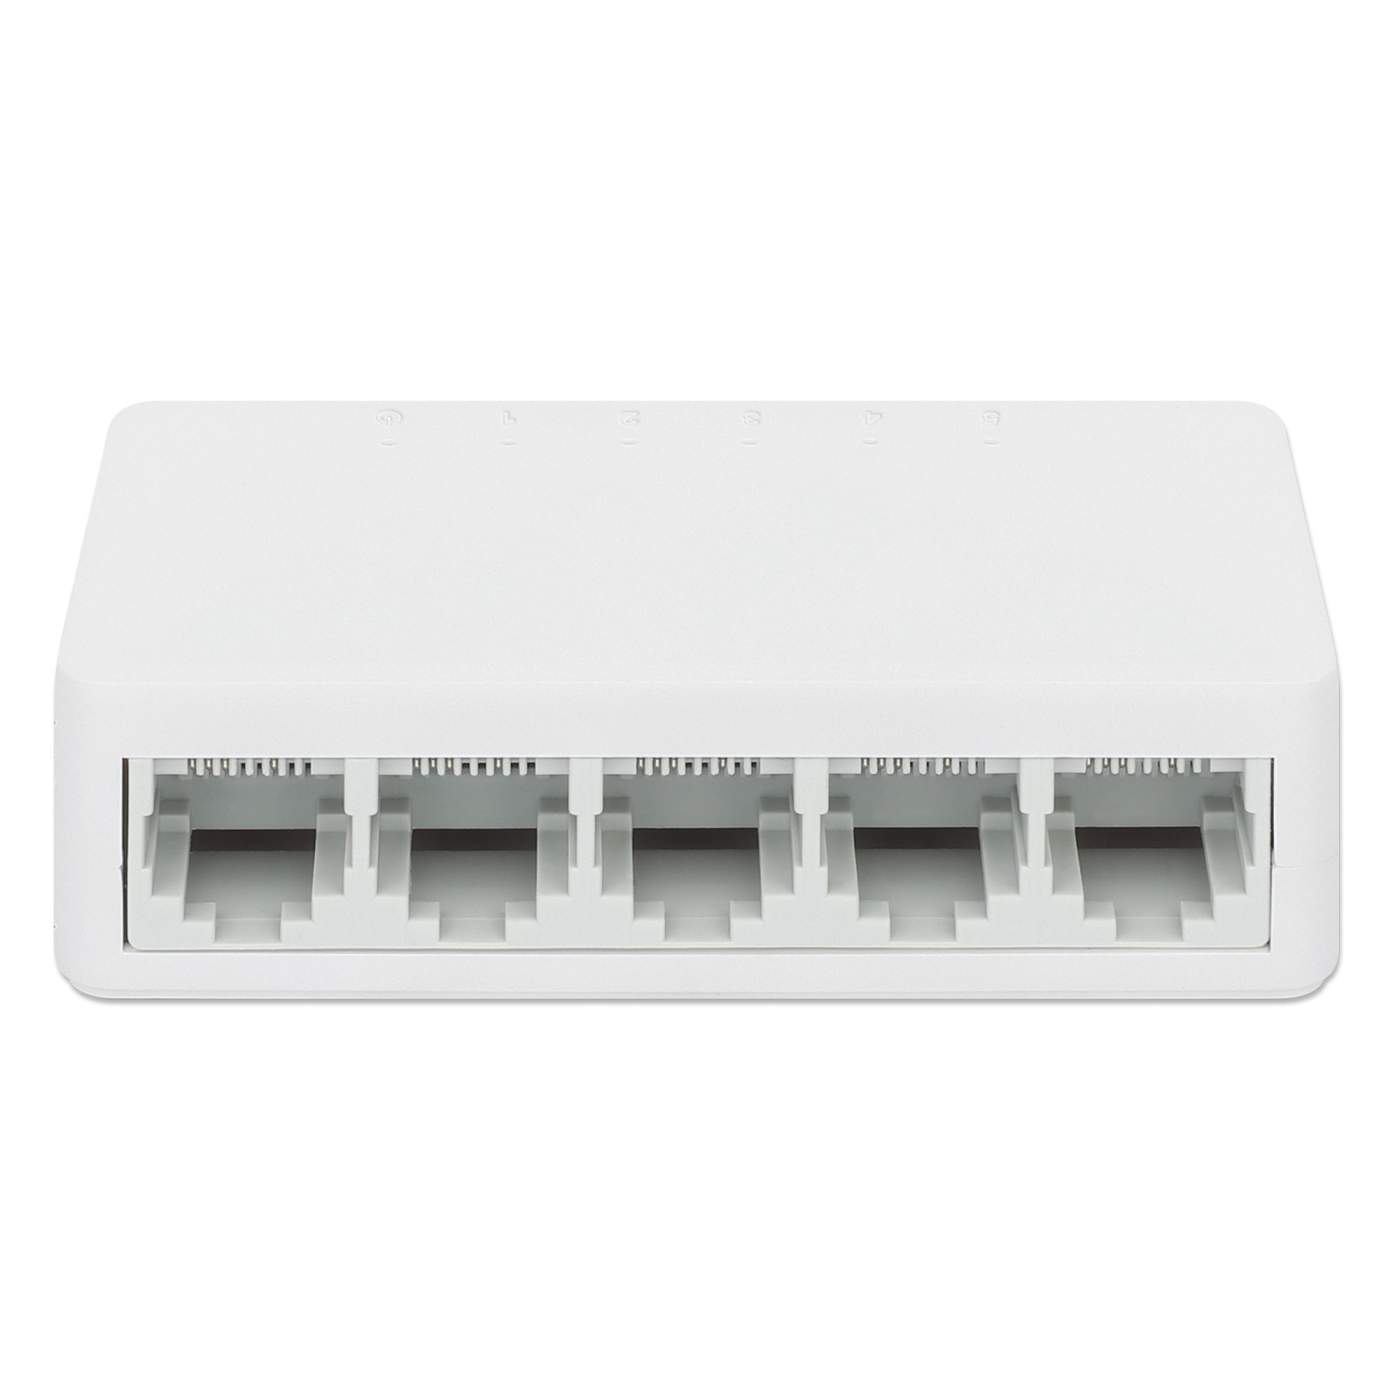 8-Port Fast Ethernet PoE+ Switch (Refurbished)